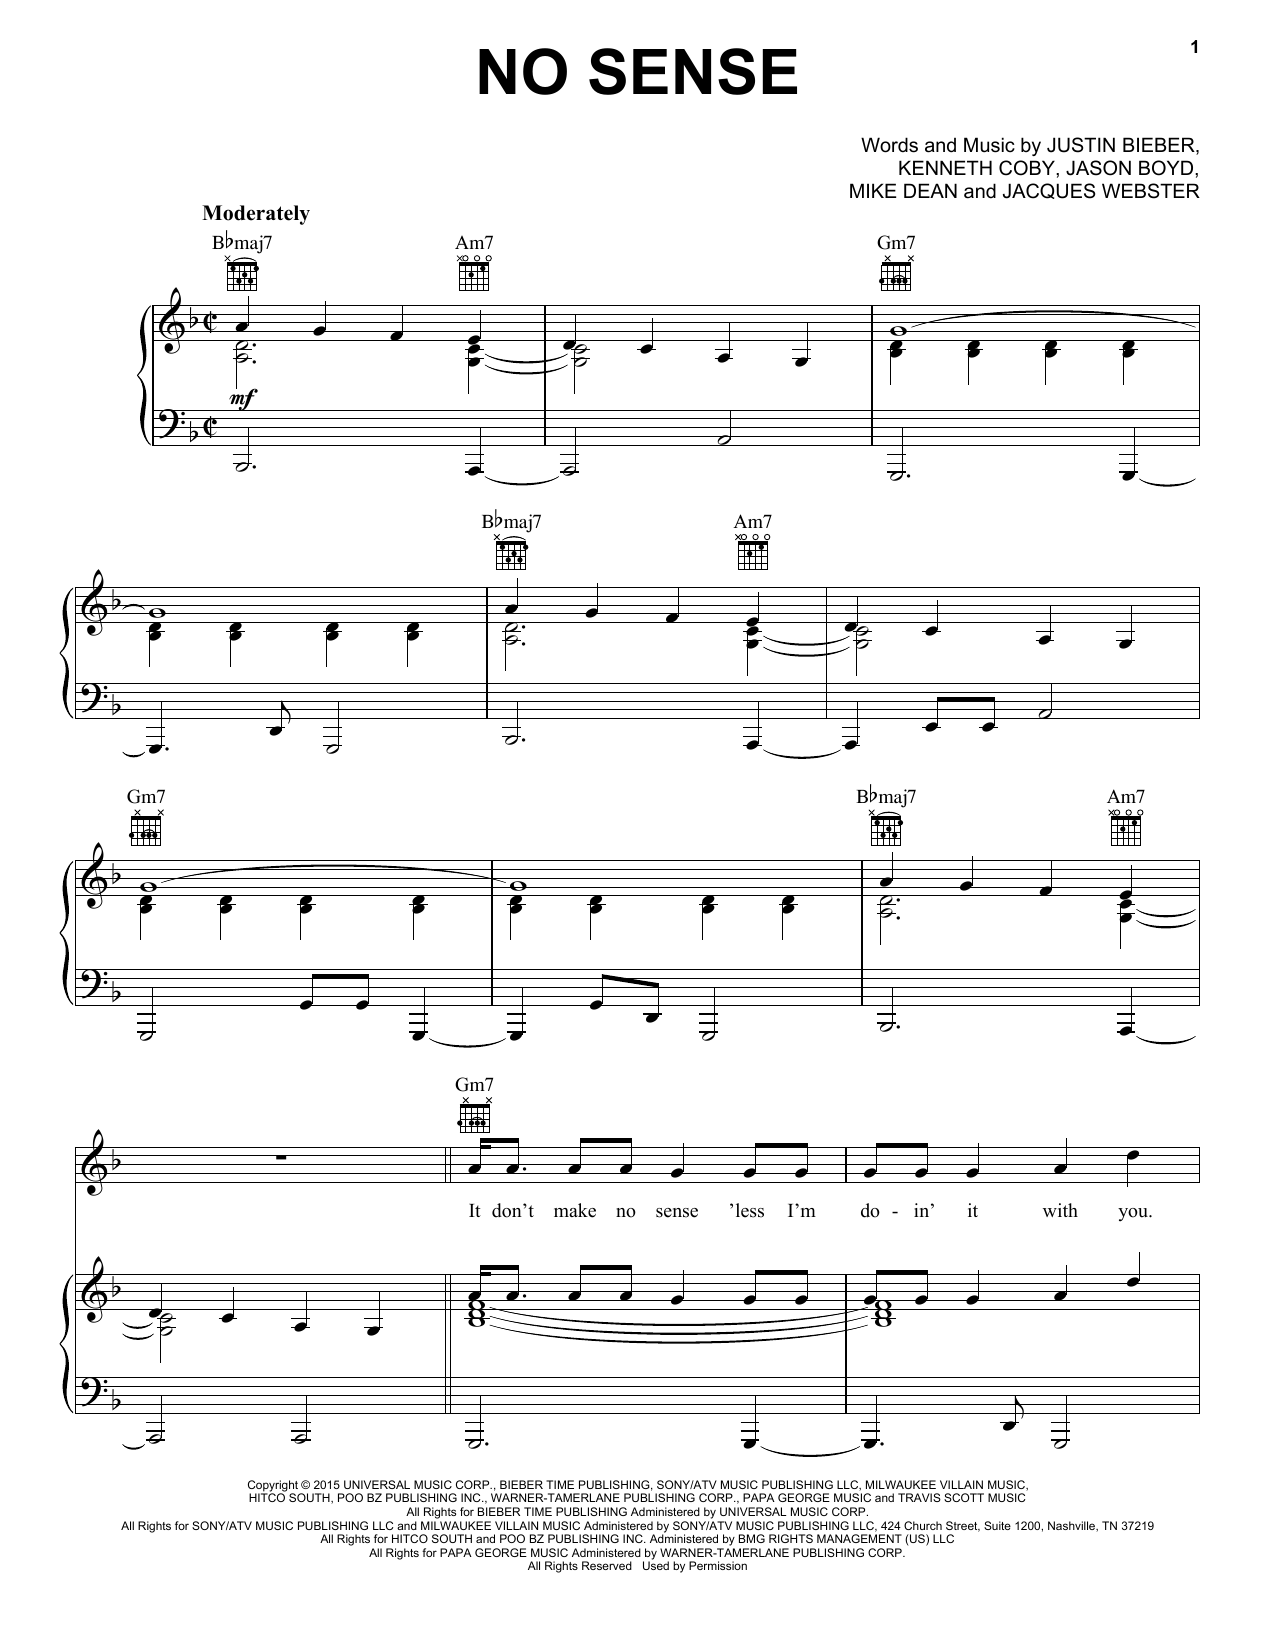 Justin Bieber No Sense Sheet Music Notes & Chords for Piano, Vocal & Guitar (Right-Hand Melody) - Download or Print PDF